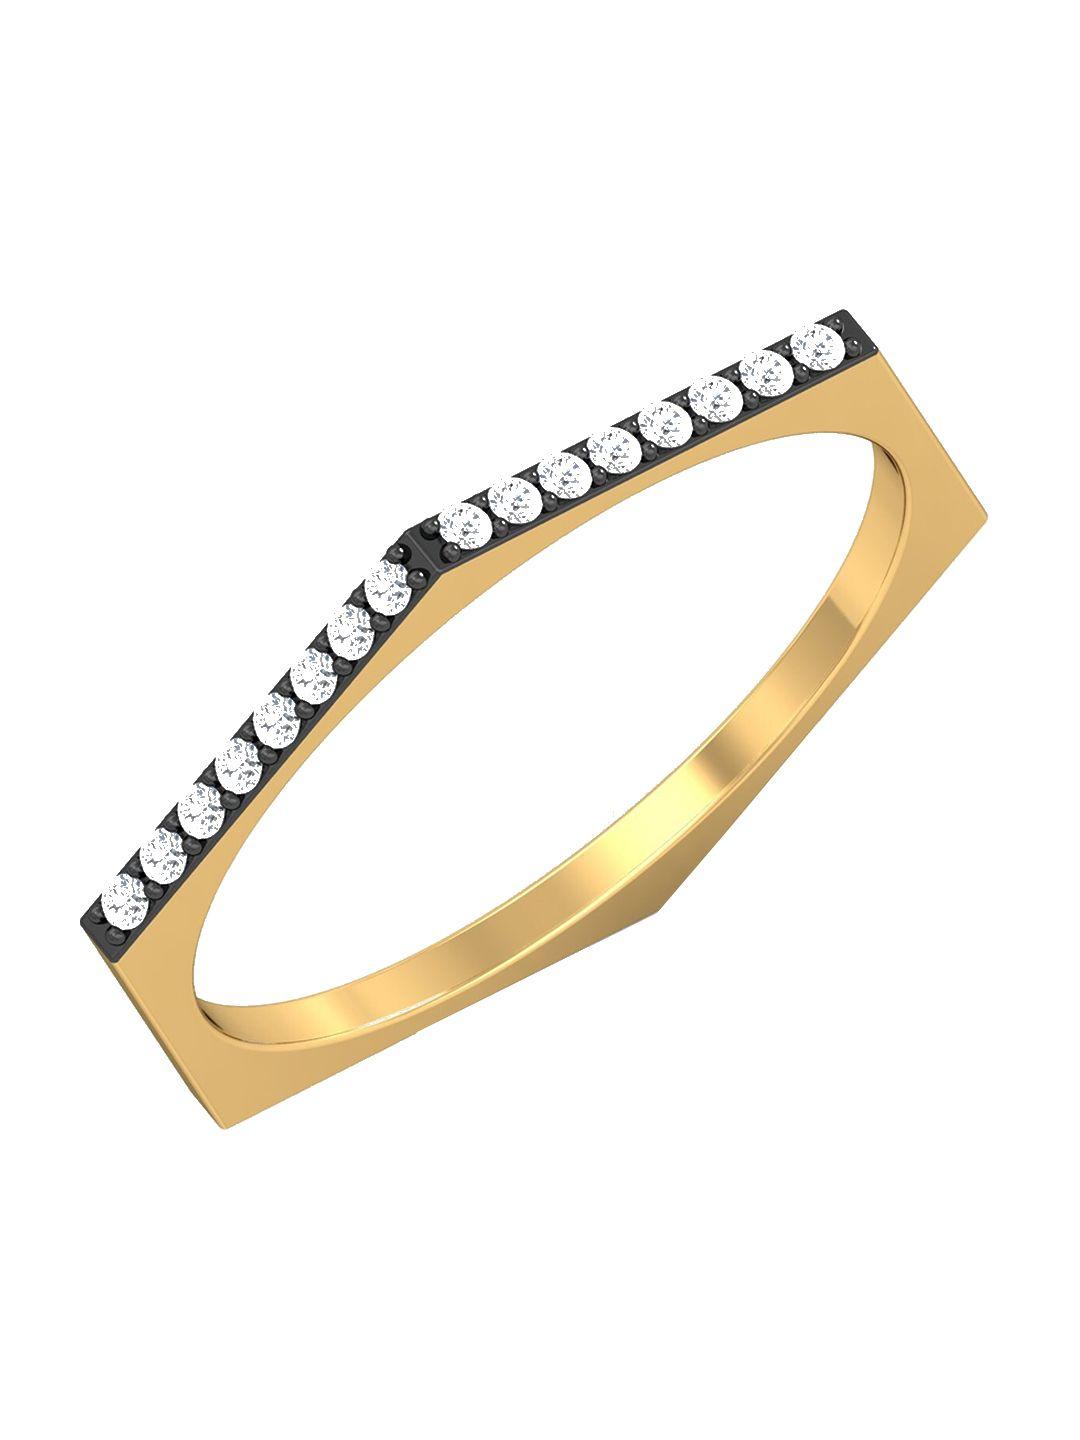 kuberbox elite geometrical 18kt gold diamond ring -1.36 gm